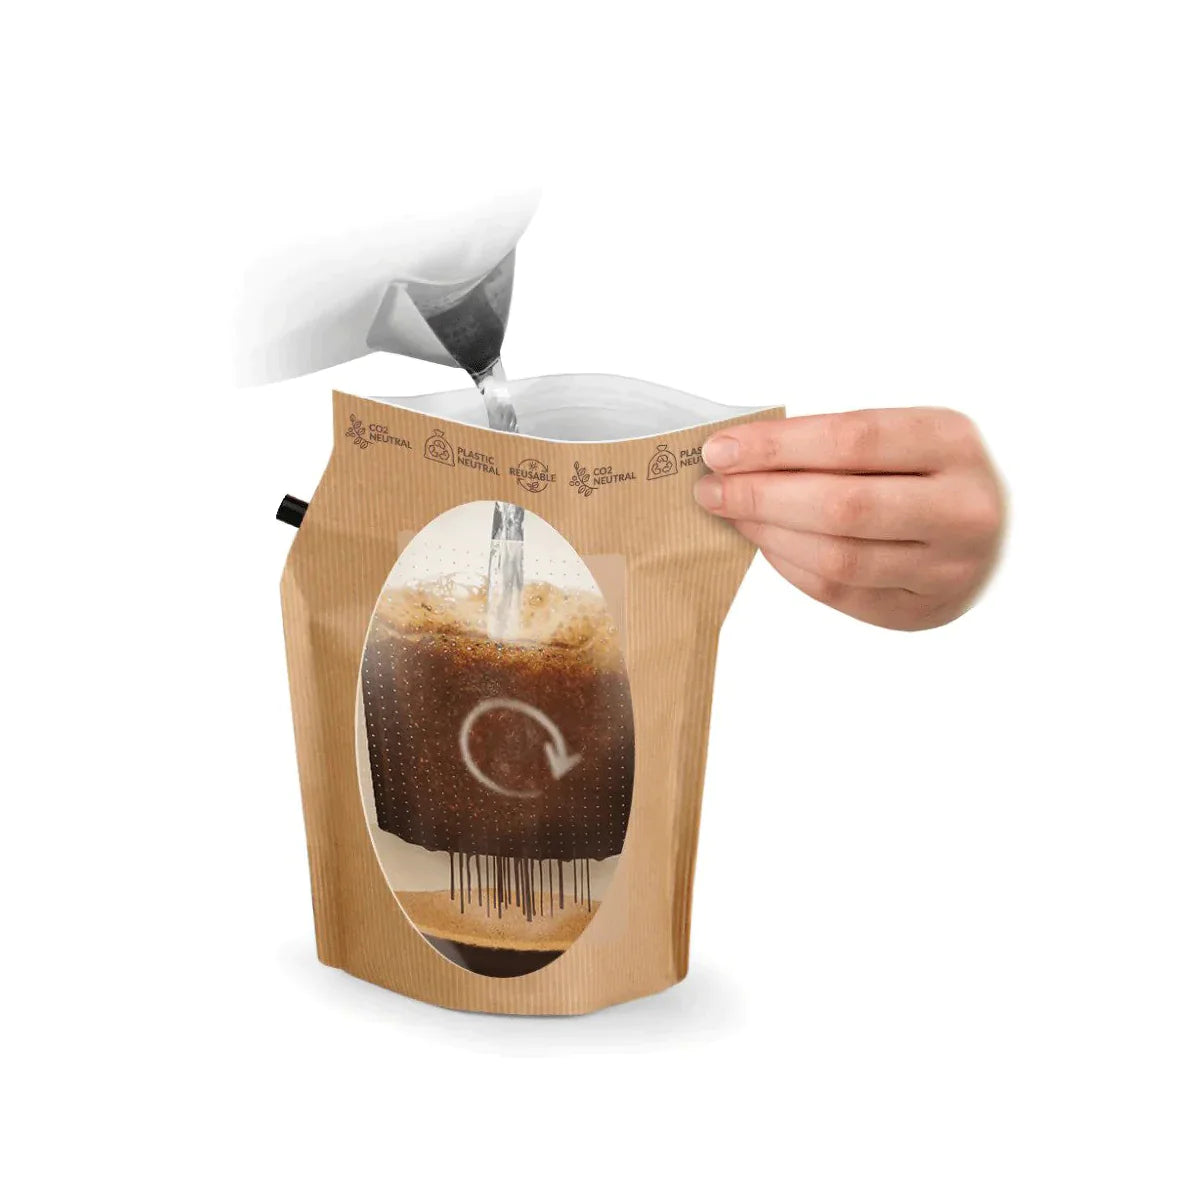 Grower’s Cup Coffeebrewer (Congo 剛果) 便攜式手沖有機及公平交易咖啡包 20g